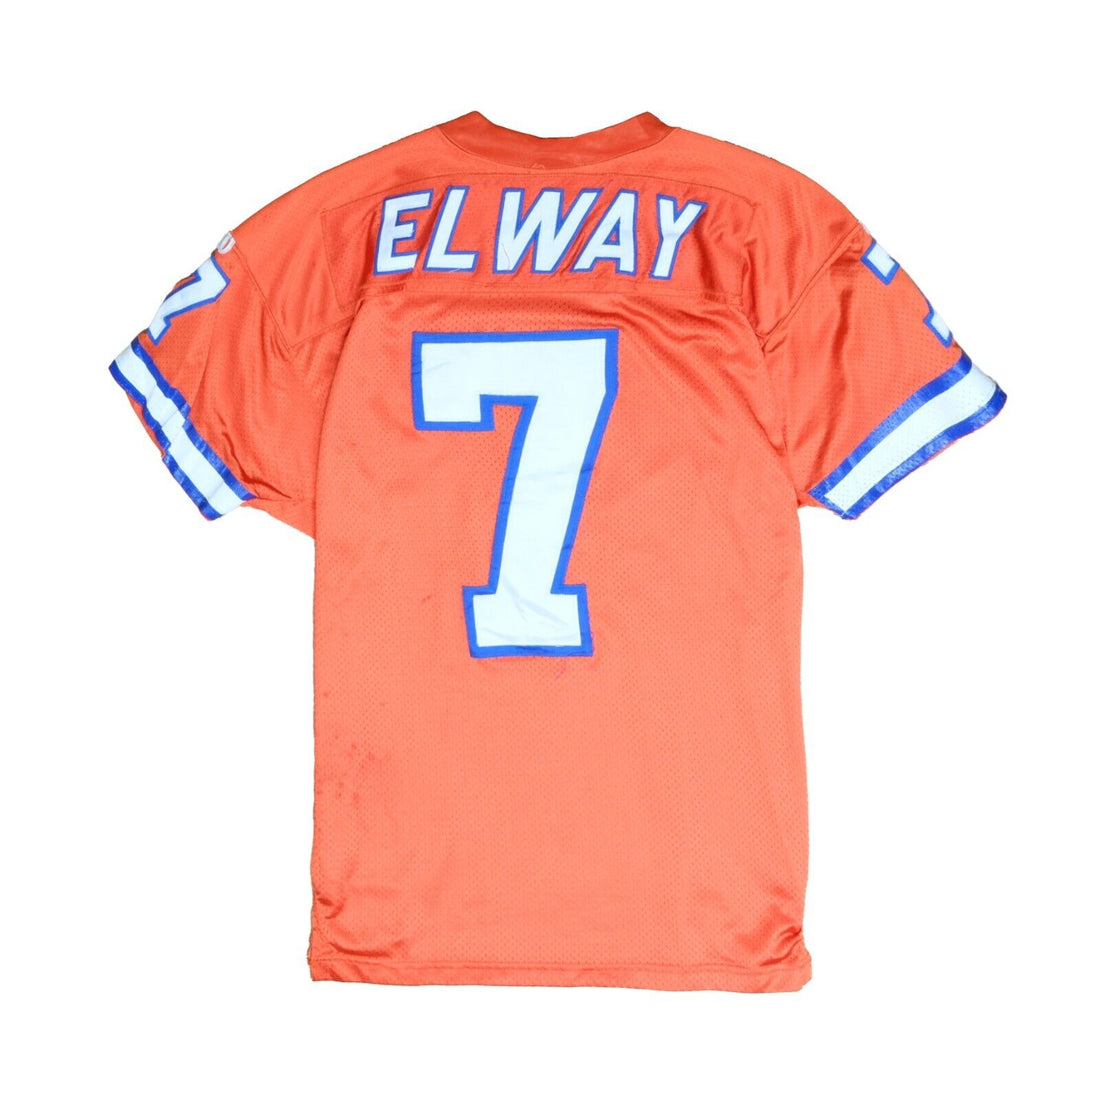 Vintage Denver Broncos John Elway Authentic Wilson Football Jersey Size 50 NFL